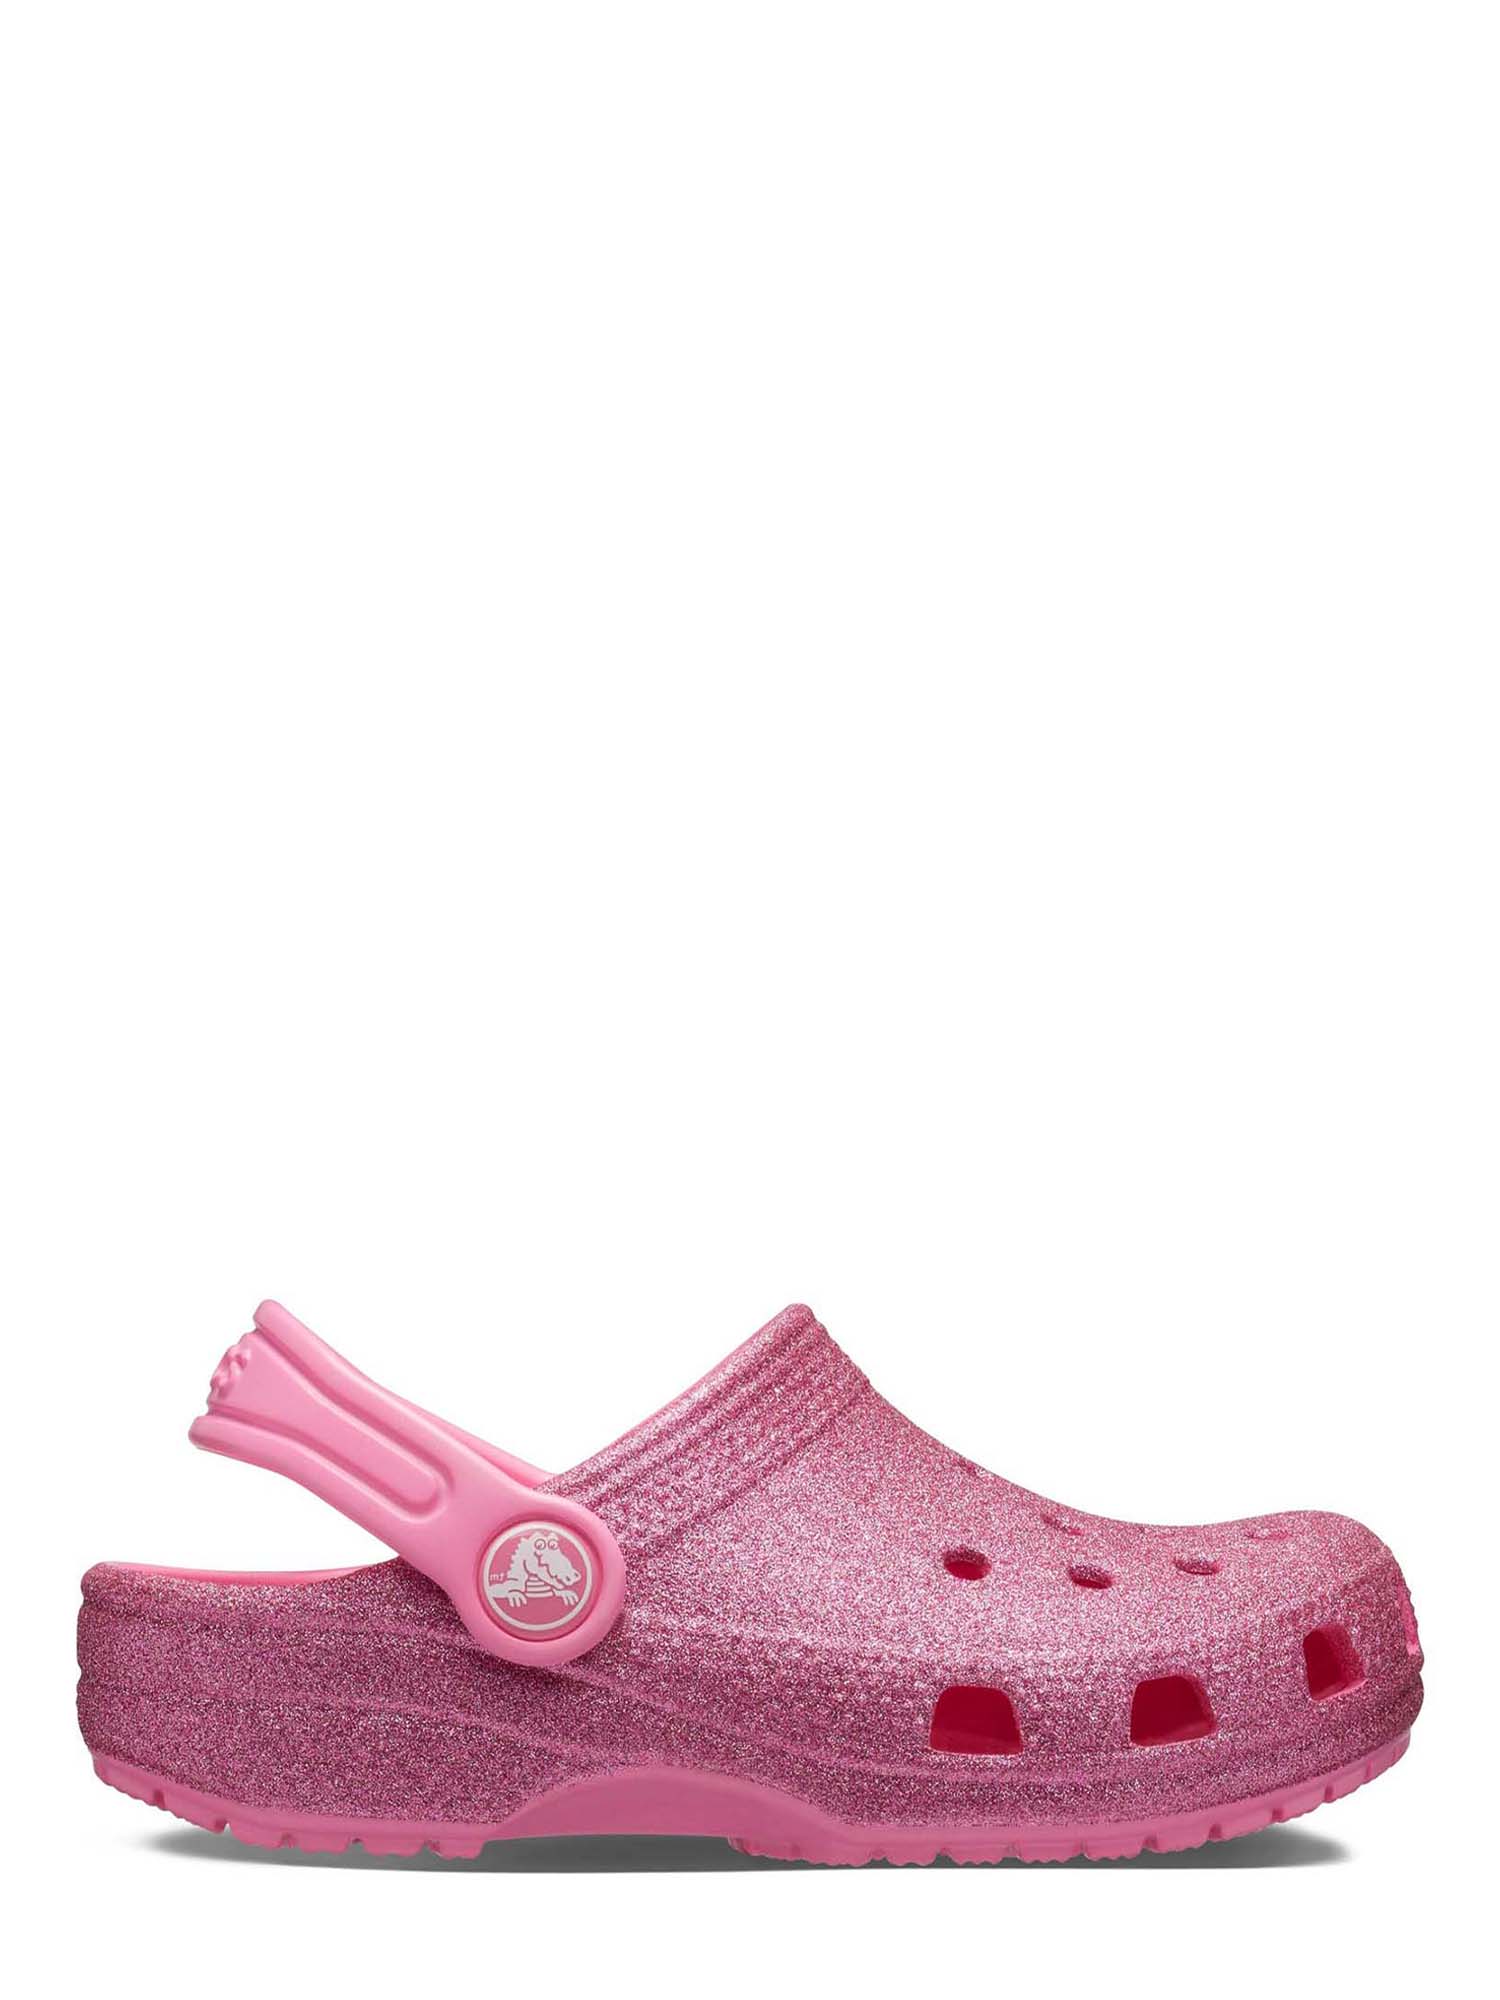 Crocs Toddler & Kids Classic Glitter Clog, Sizes 4-6 - image 2 of 4